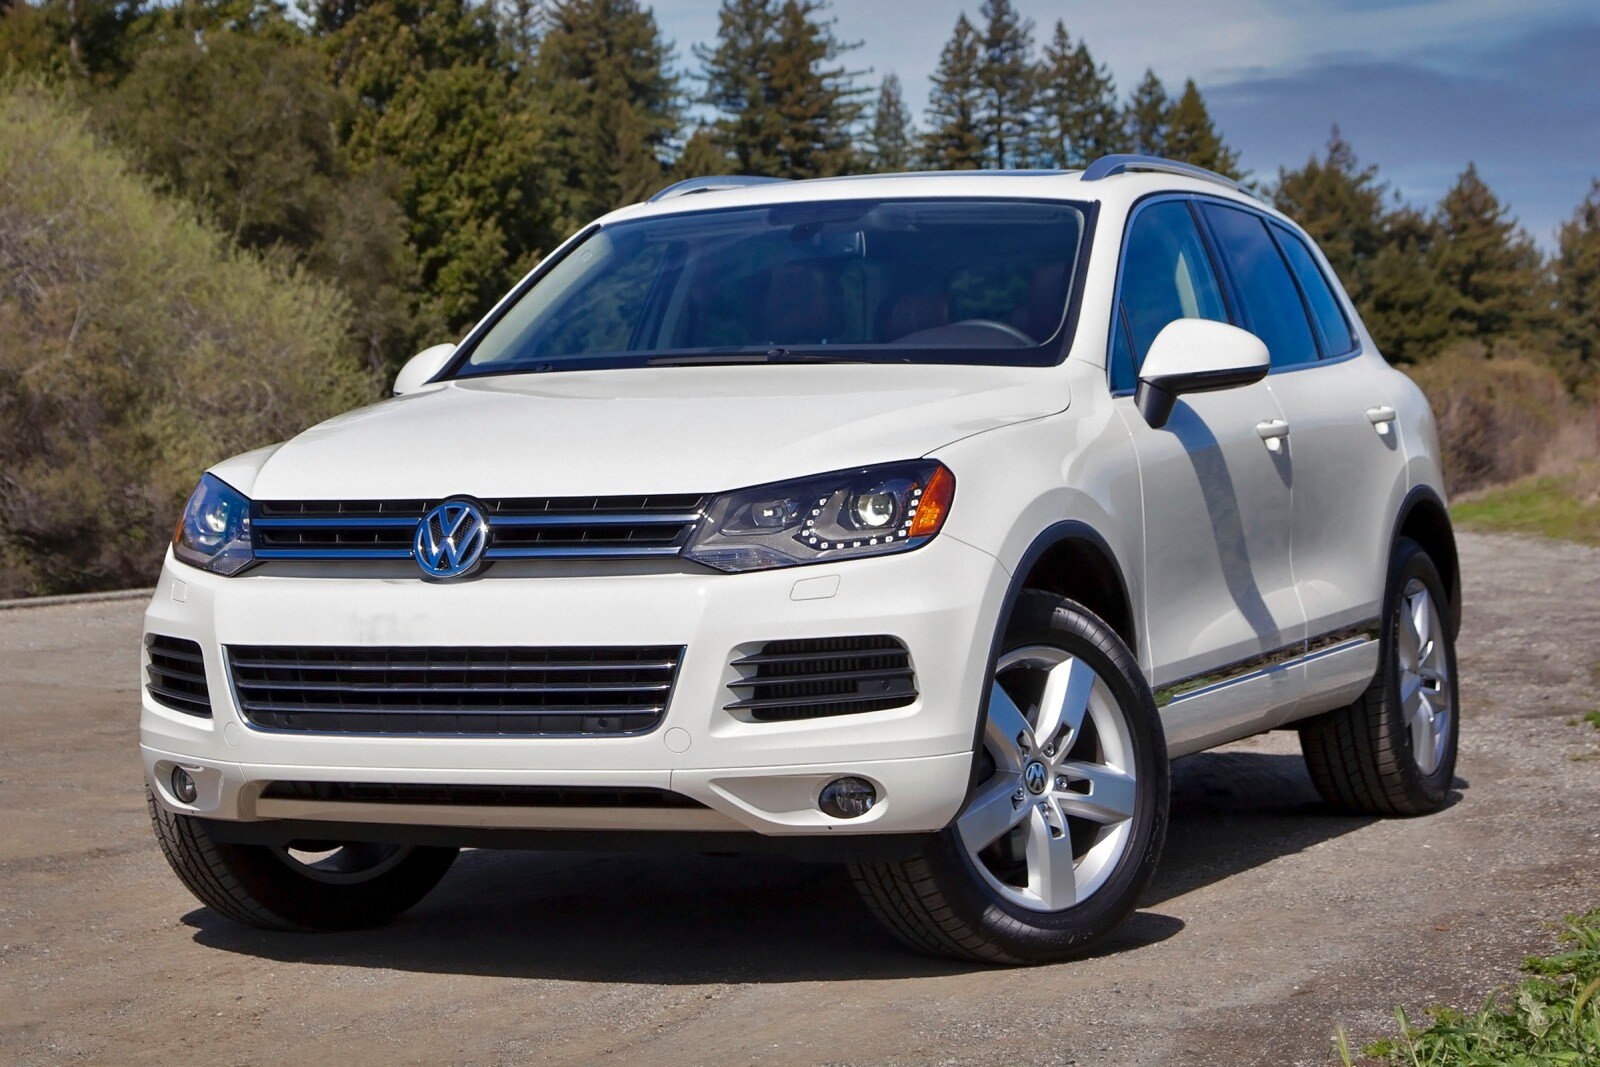 Used 2015 Volkswagen Touareg Hybrid Review | Edmunds